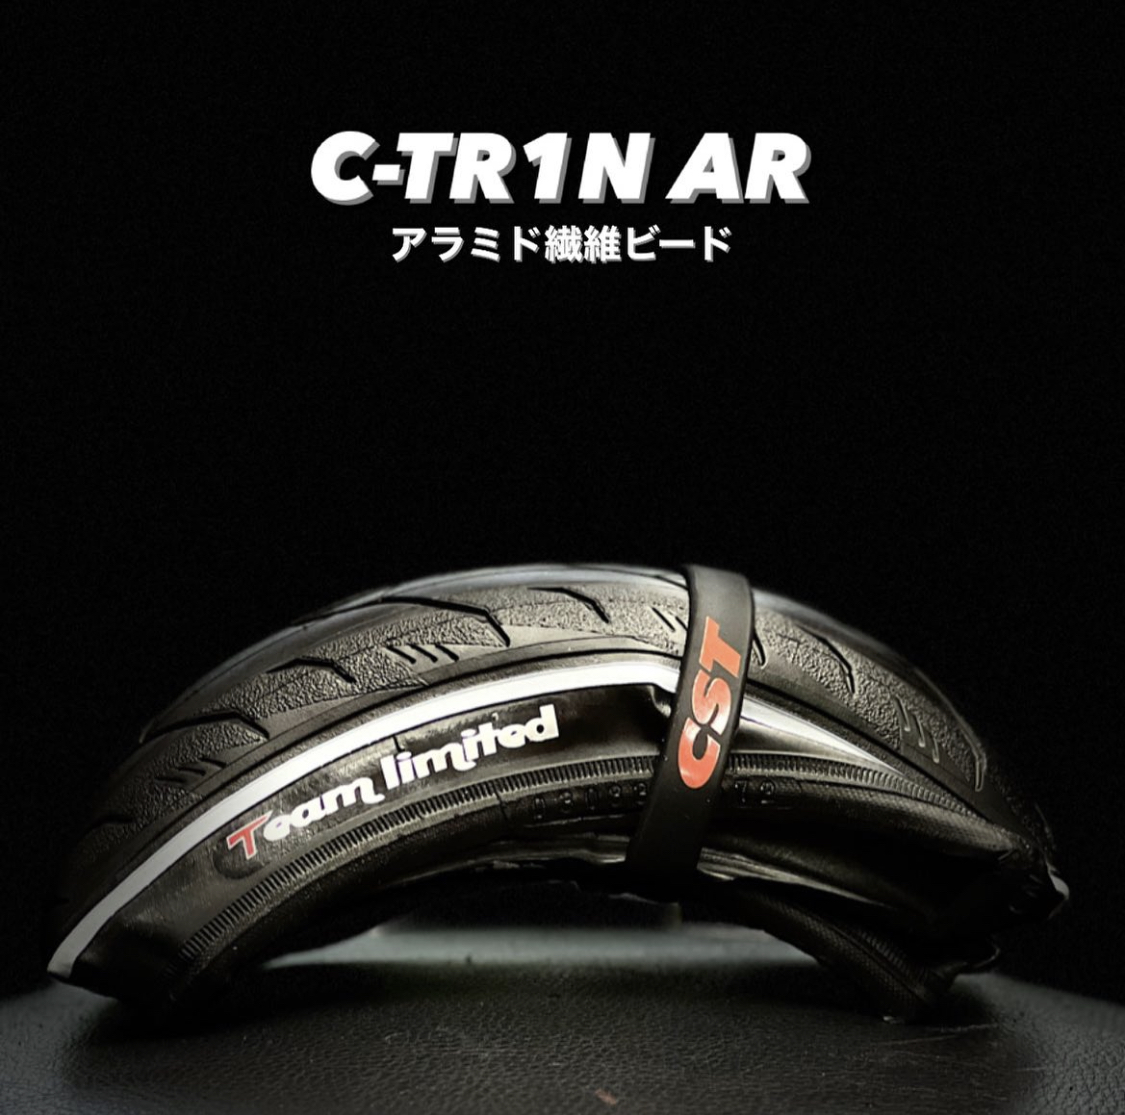 C-TR1N AR Team limited type Racingアラミドビードタイヤ